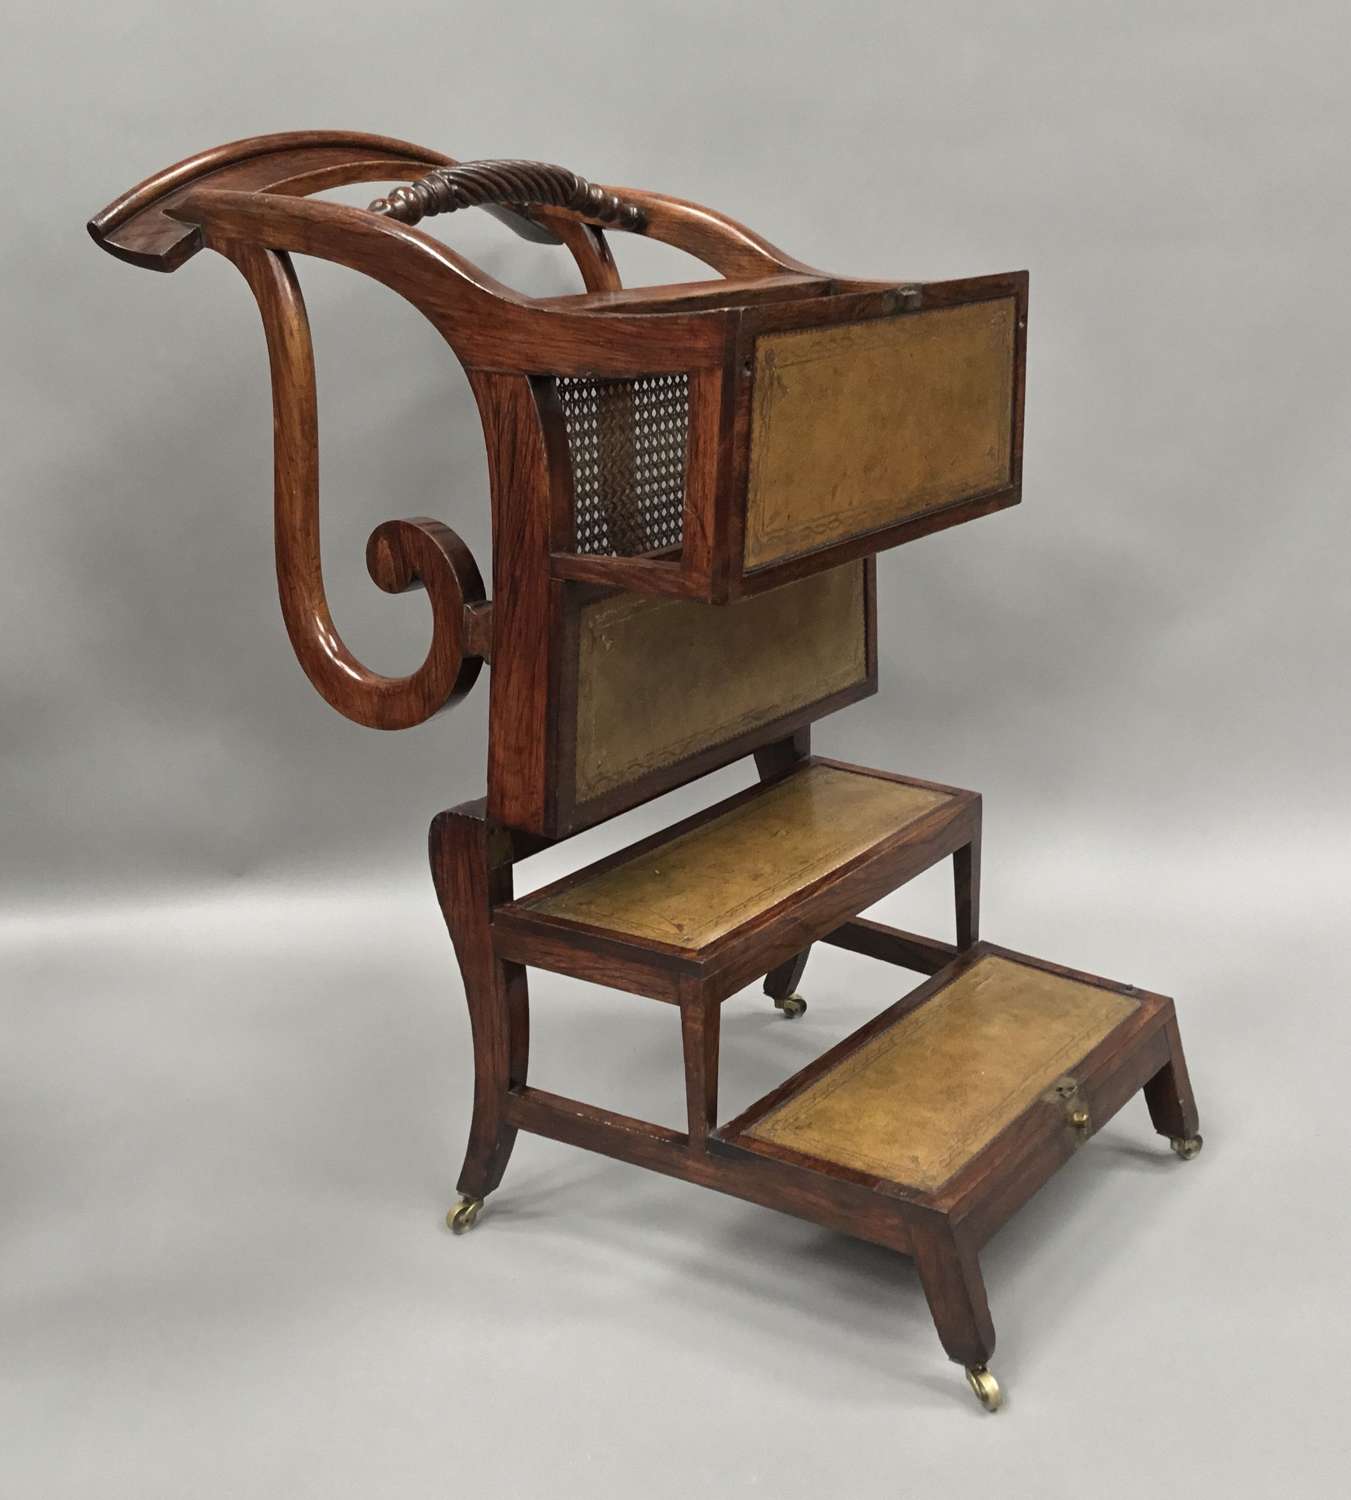 Regency metamorphic library chair / library steps